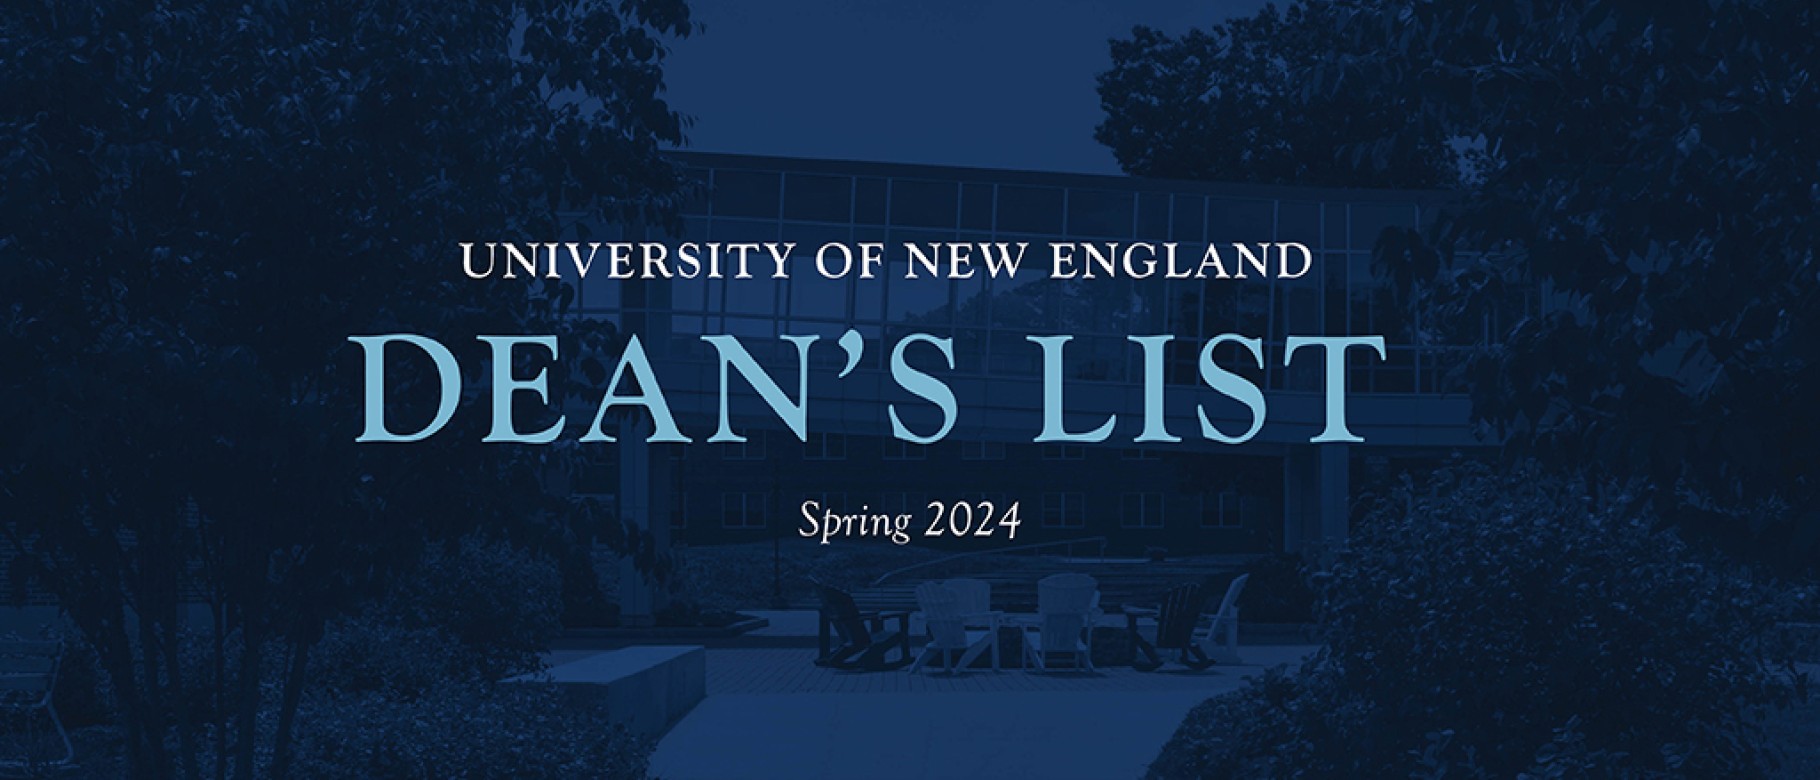 Dean's List - Spring 2024 graphic